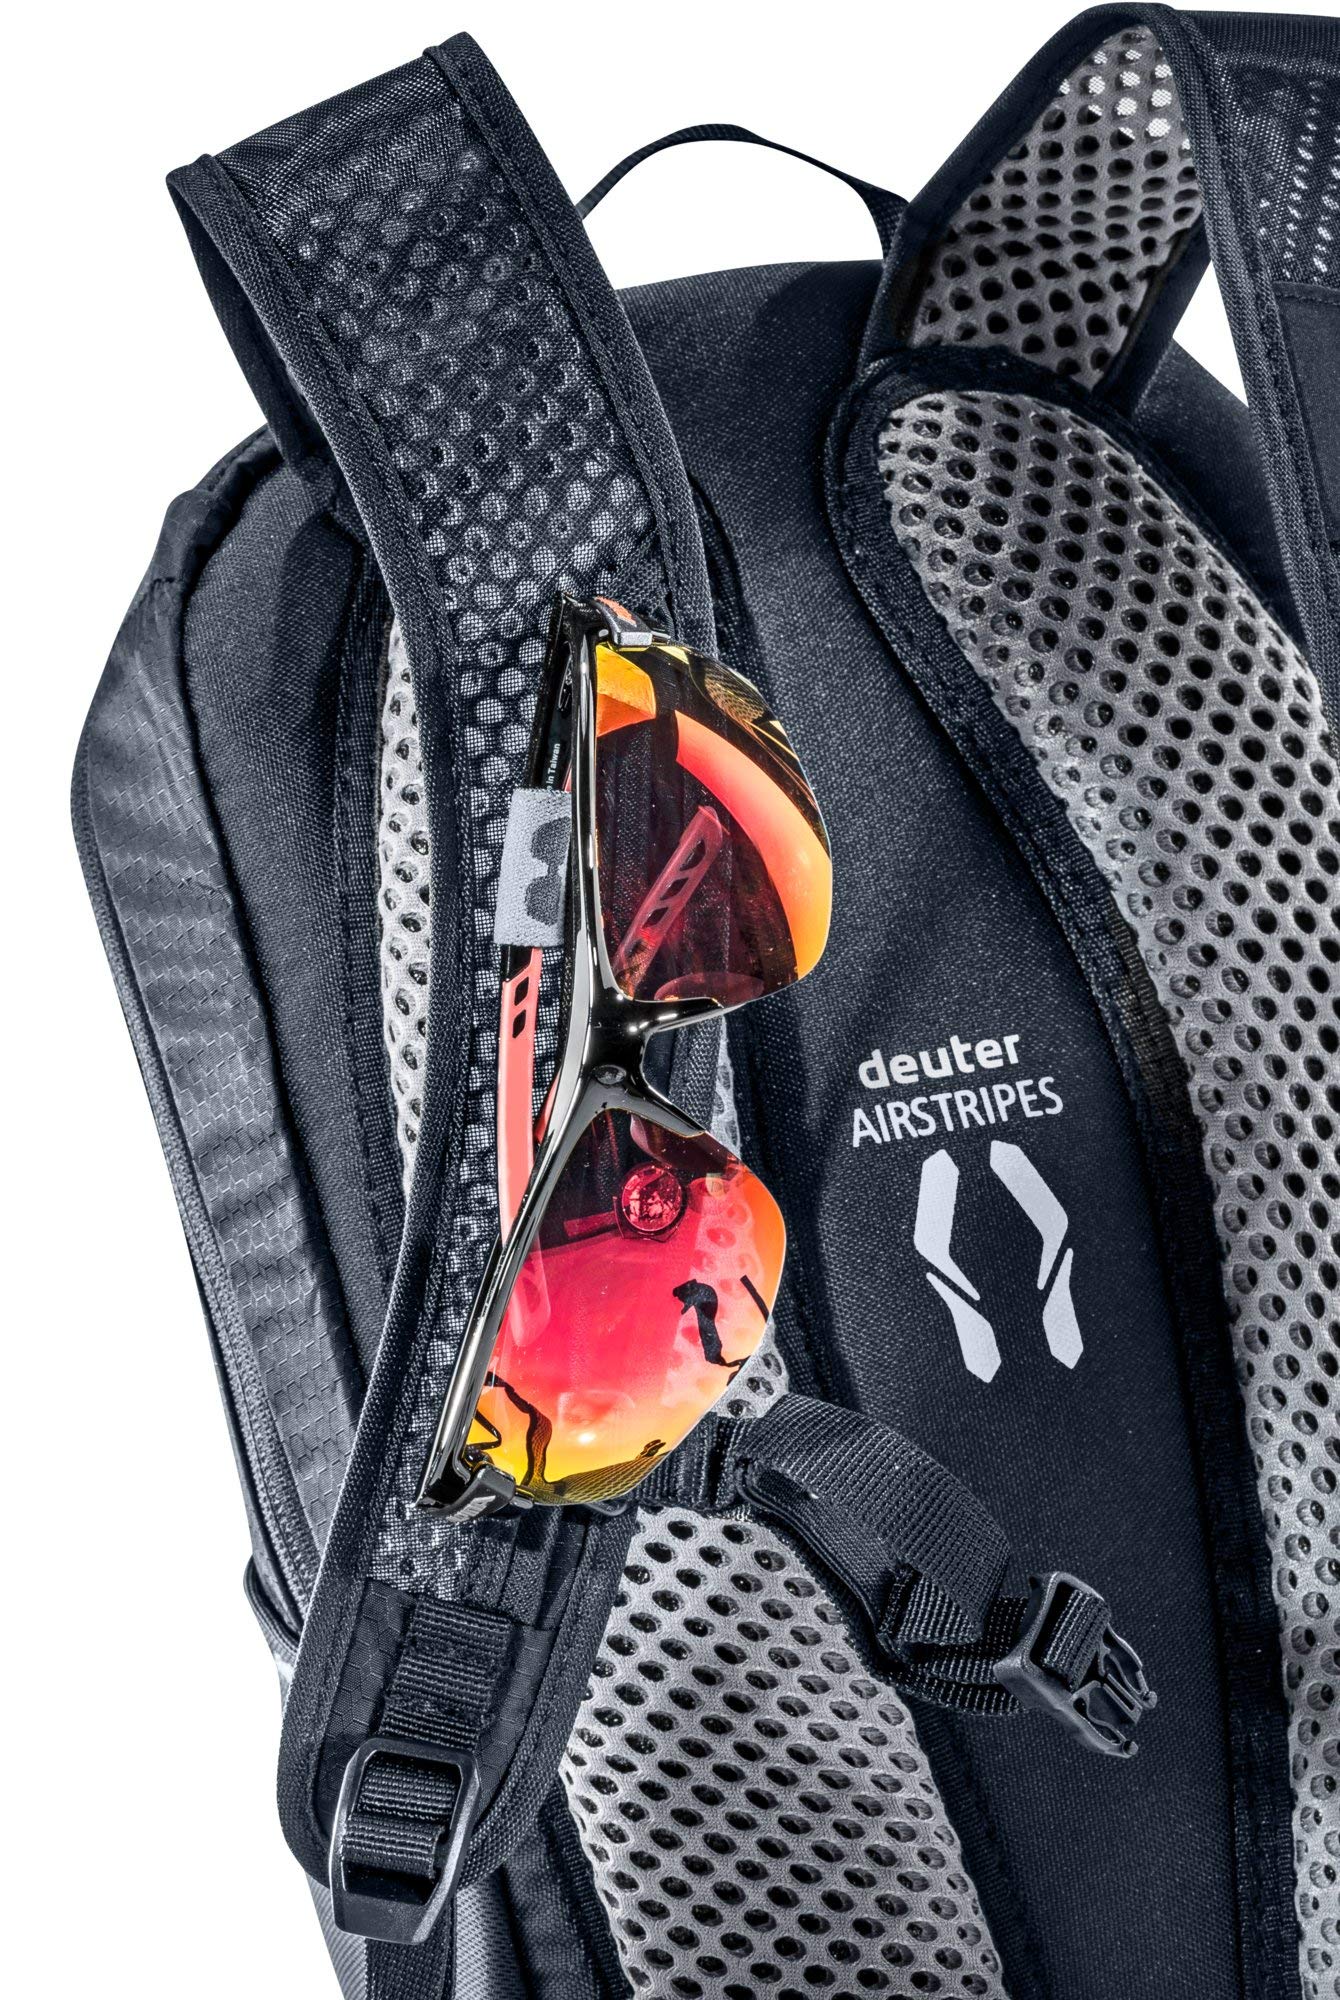 deuter Unisex – Adult's Race X Bicycle Backpack, Black, 12 l